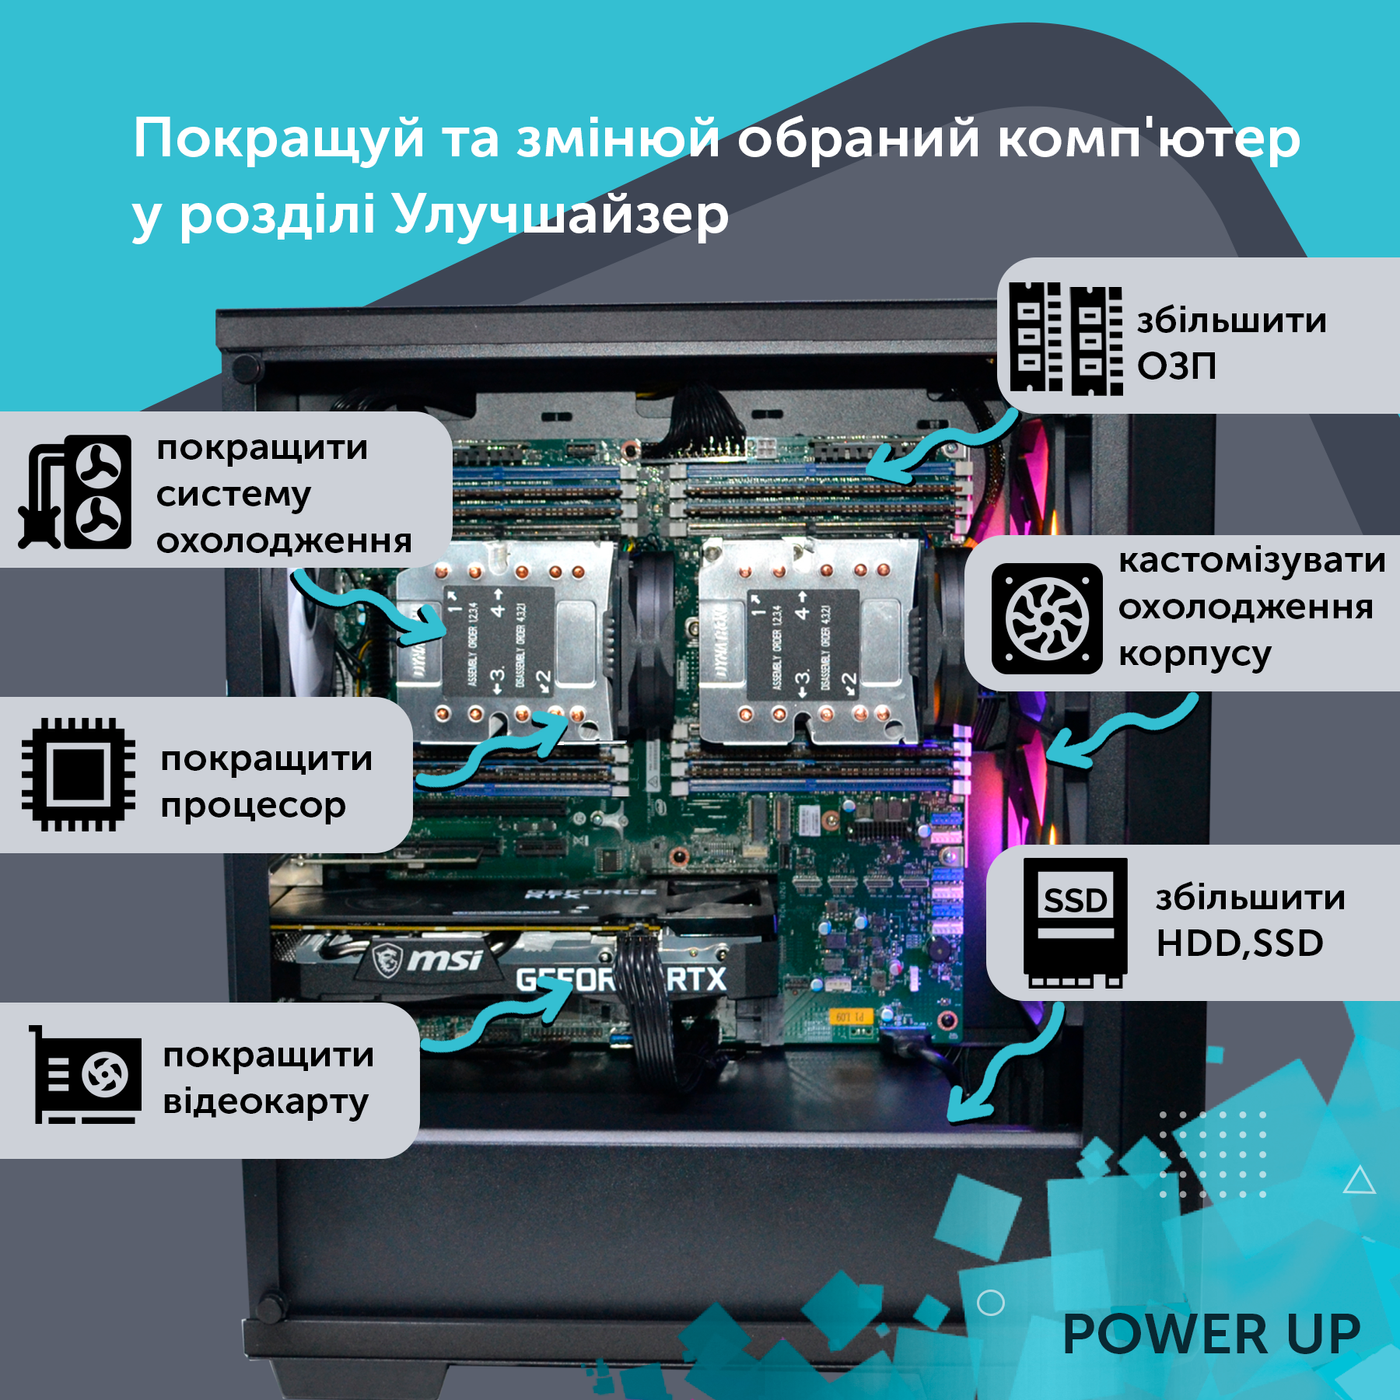 Сервер двухпроцессорный TOWER PowerUp #78 AMD EPYC 7551 x2/128 GB/SSD 512GB х2 Raid/Int Video